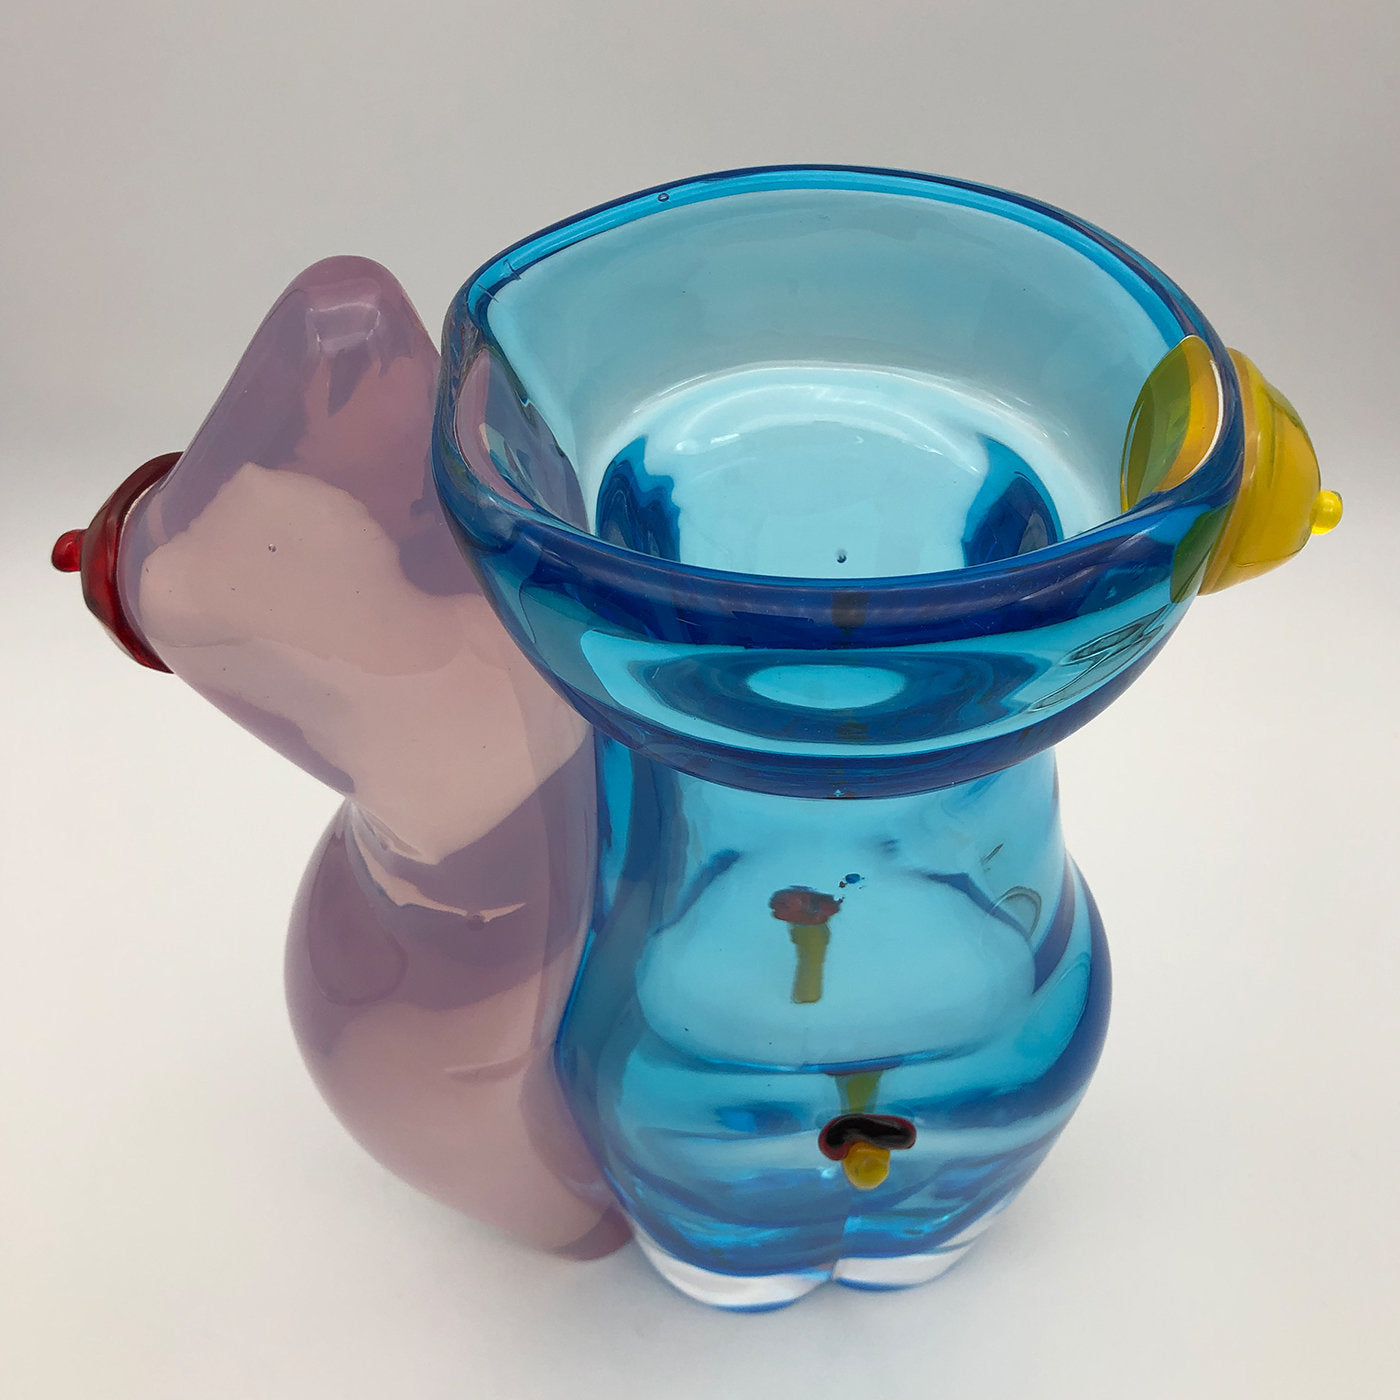 Eros Aquamarine Vase #2 by Toso Cristiano - Alternative view 1